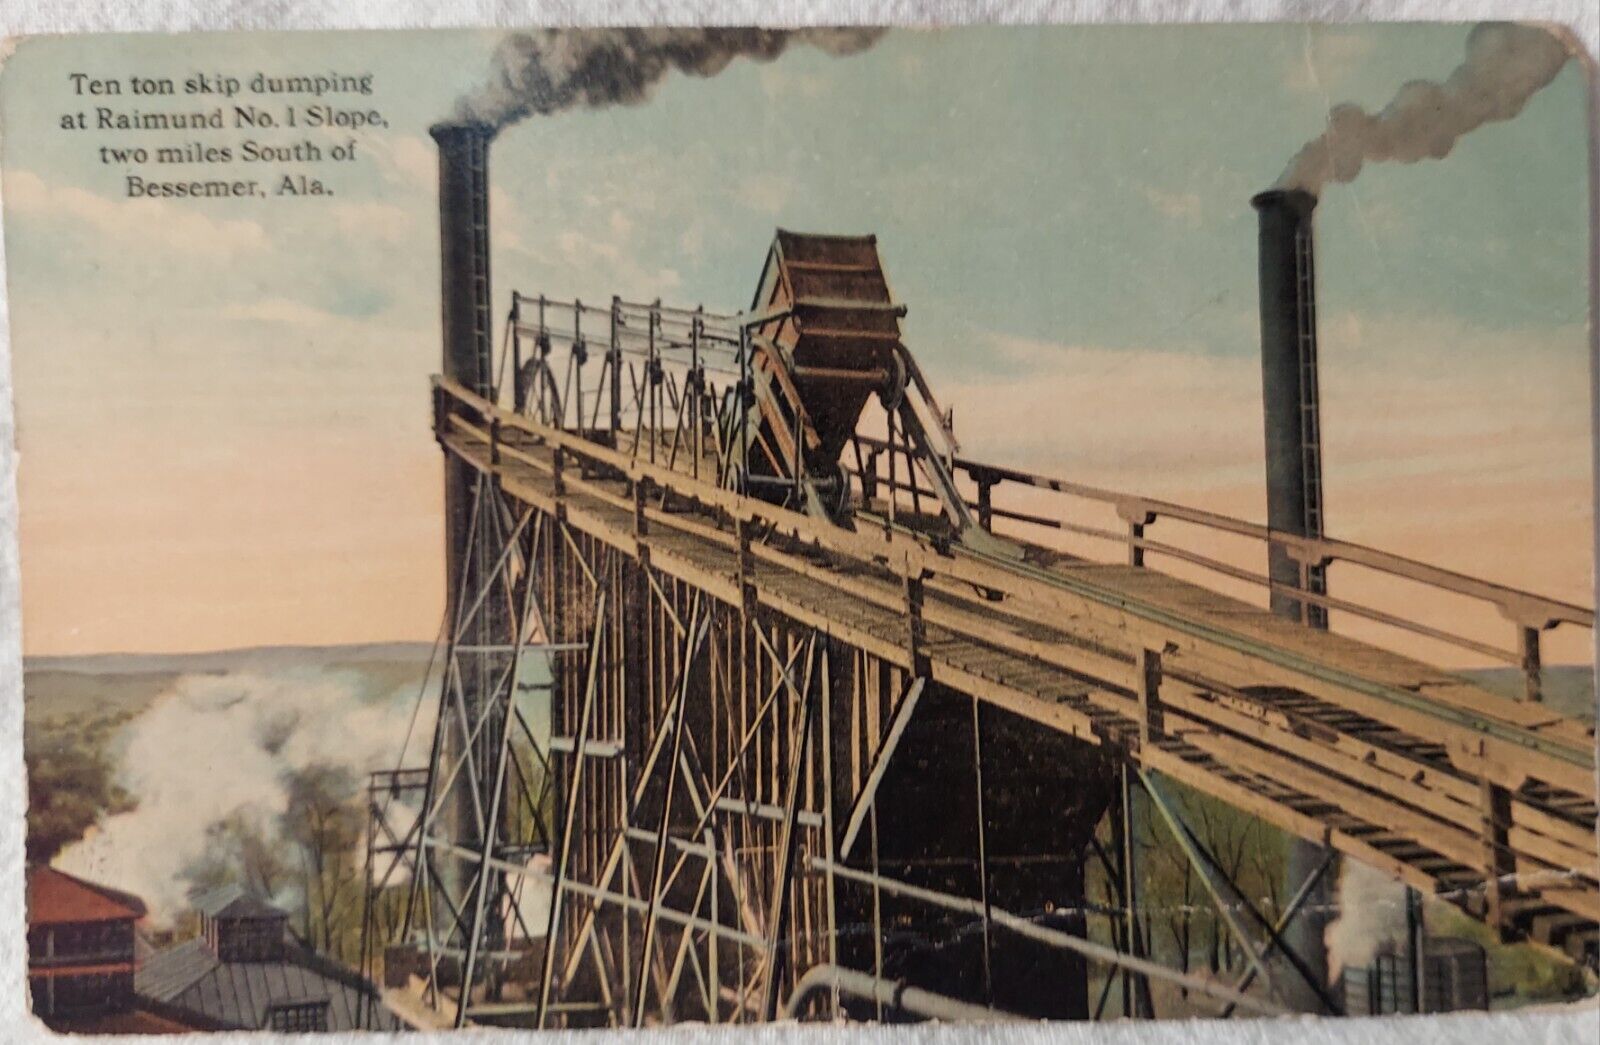 Bessemer Alabama Vtg Postcard Raimund No. 1 Slope Ten Ton Skip Dumping (A110)